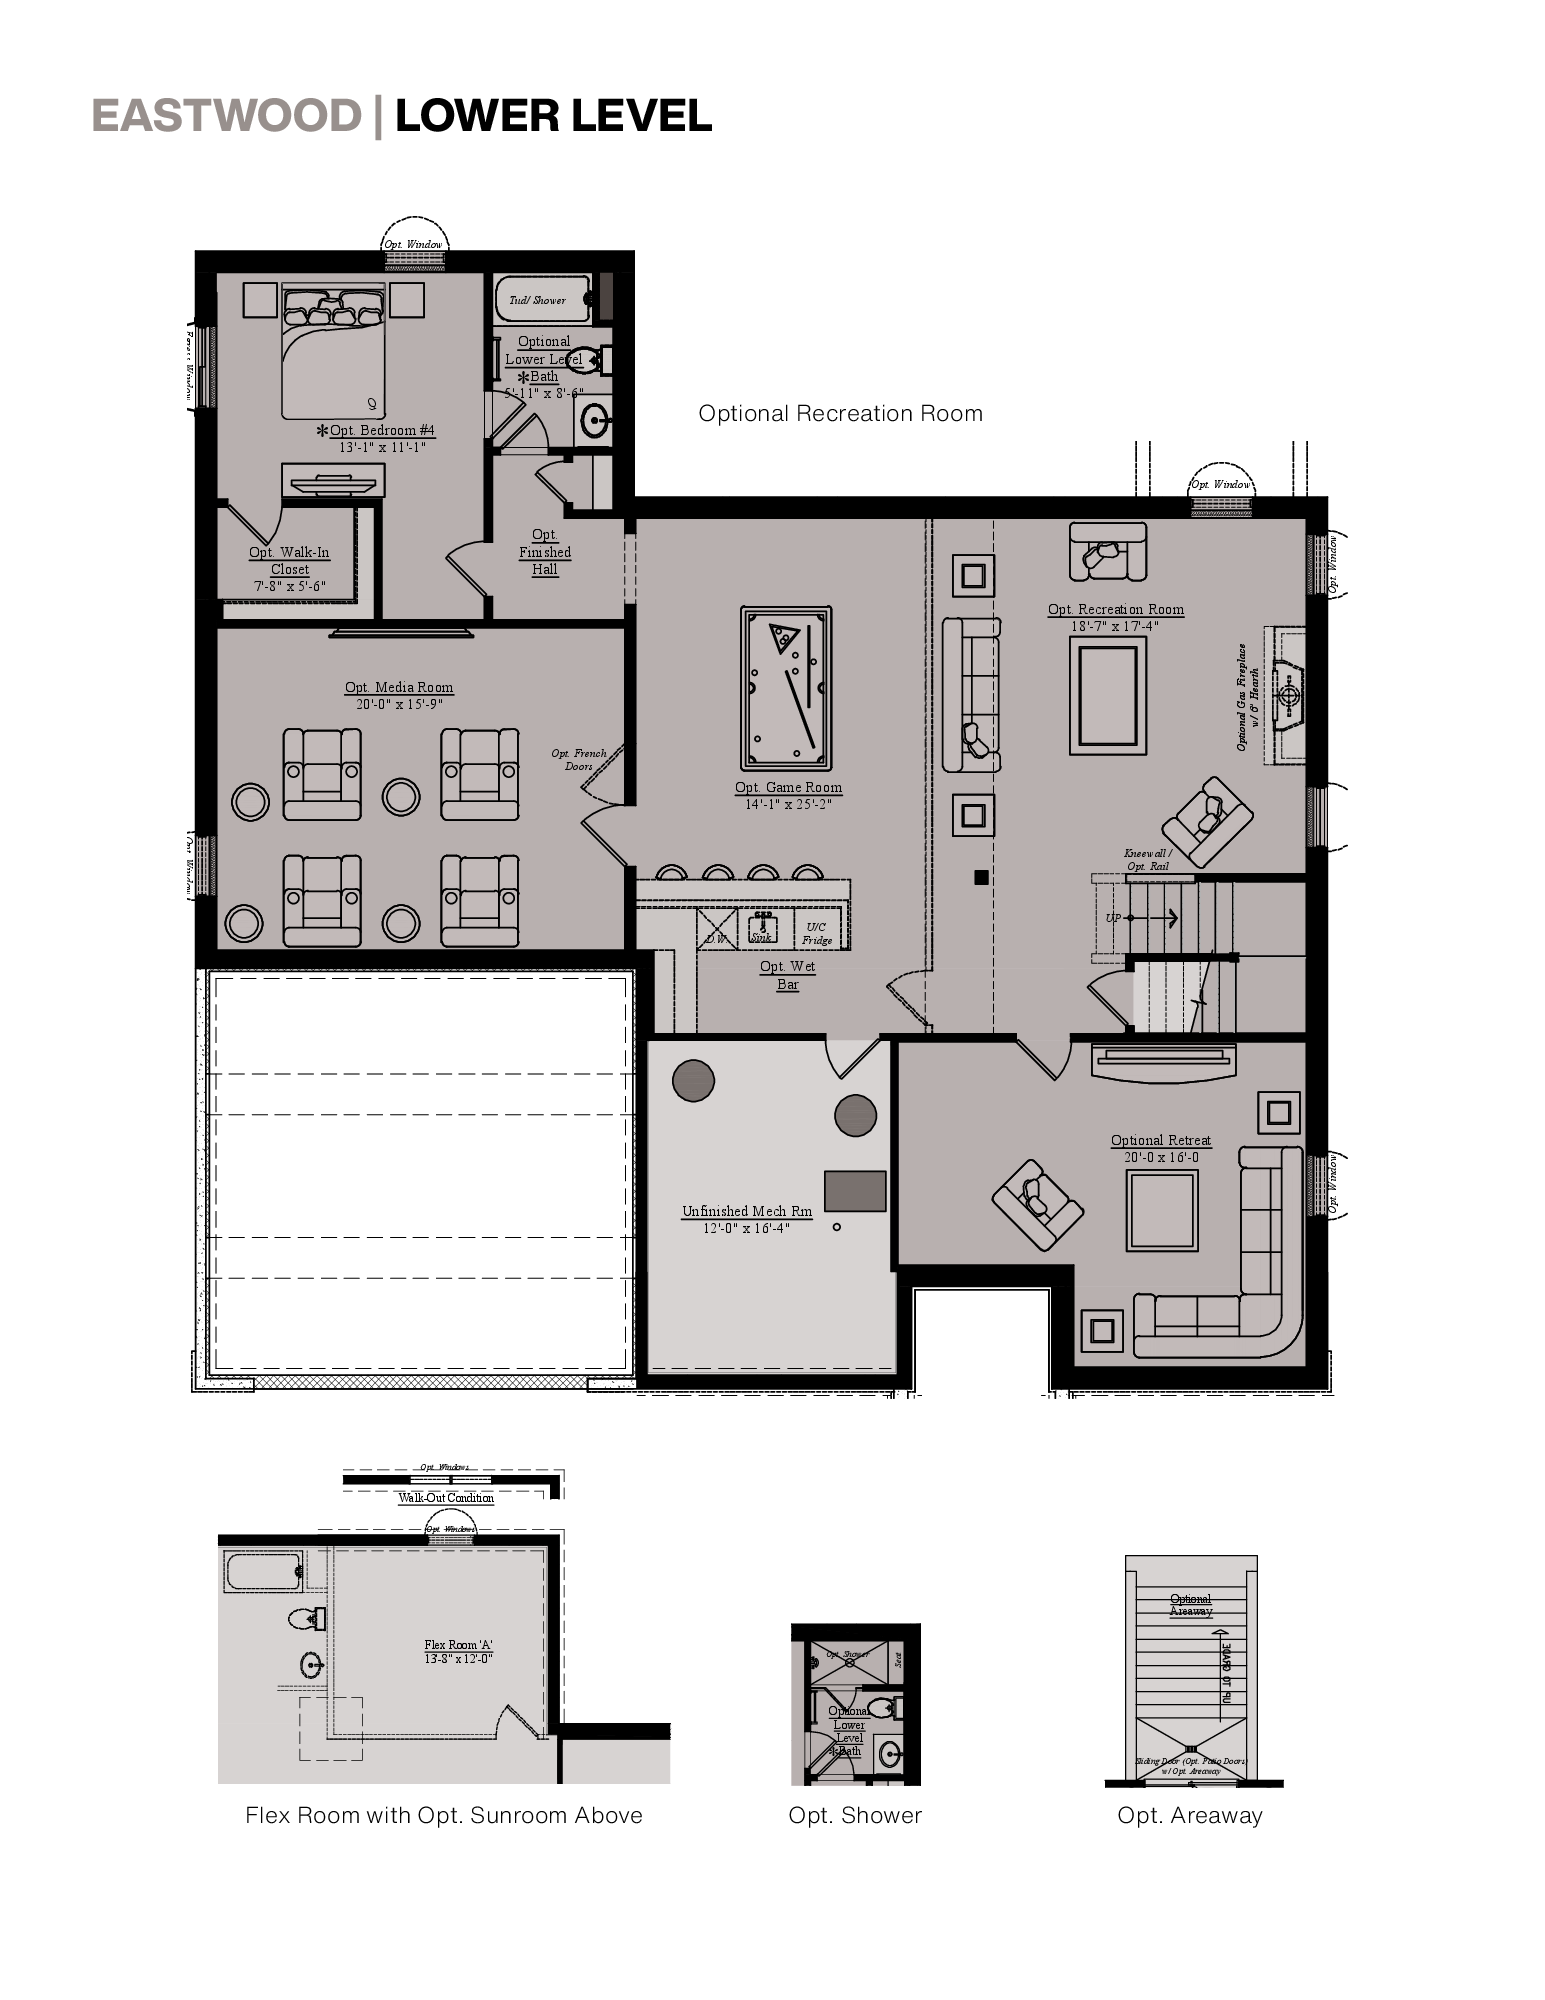 The Eastwood floor plan 4